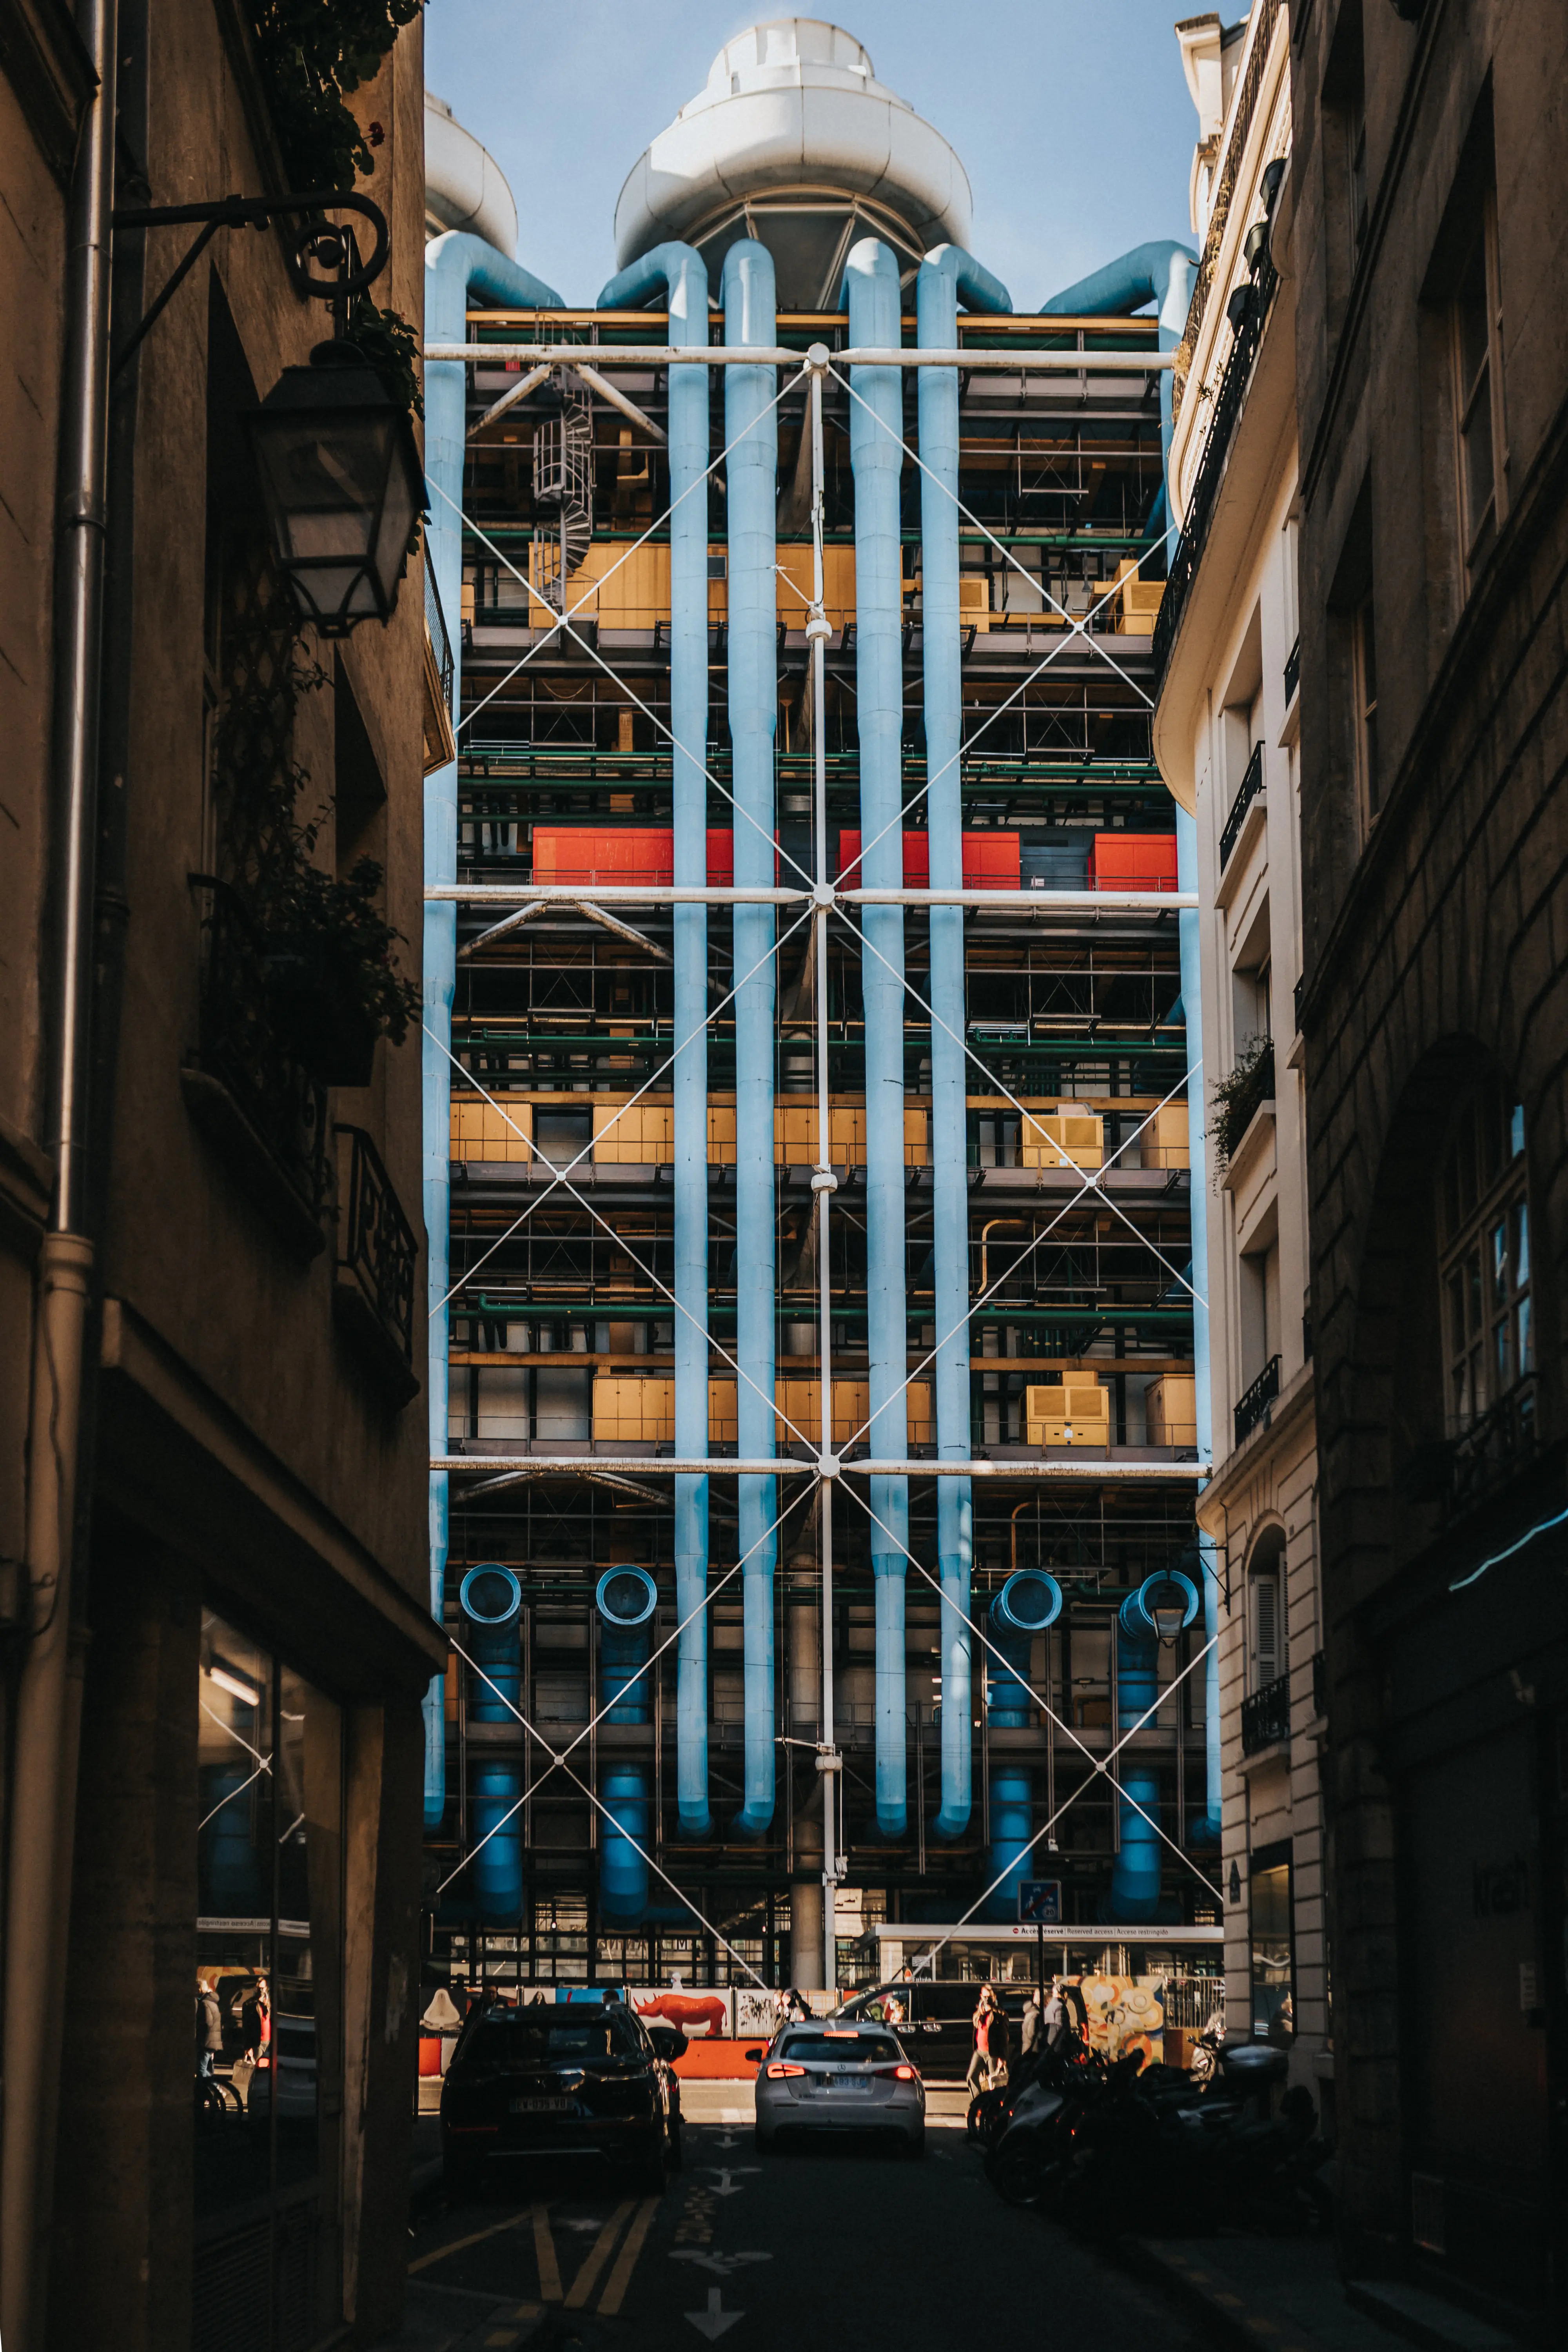 pompidou center museums in paris free sunday